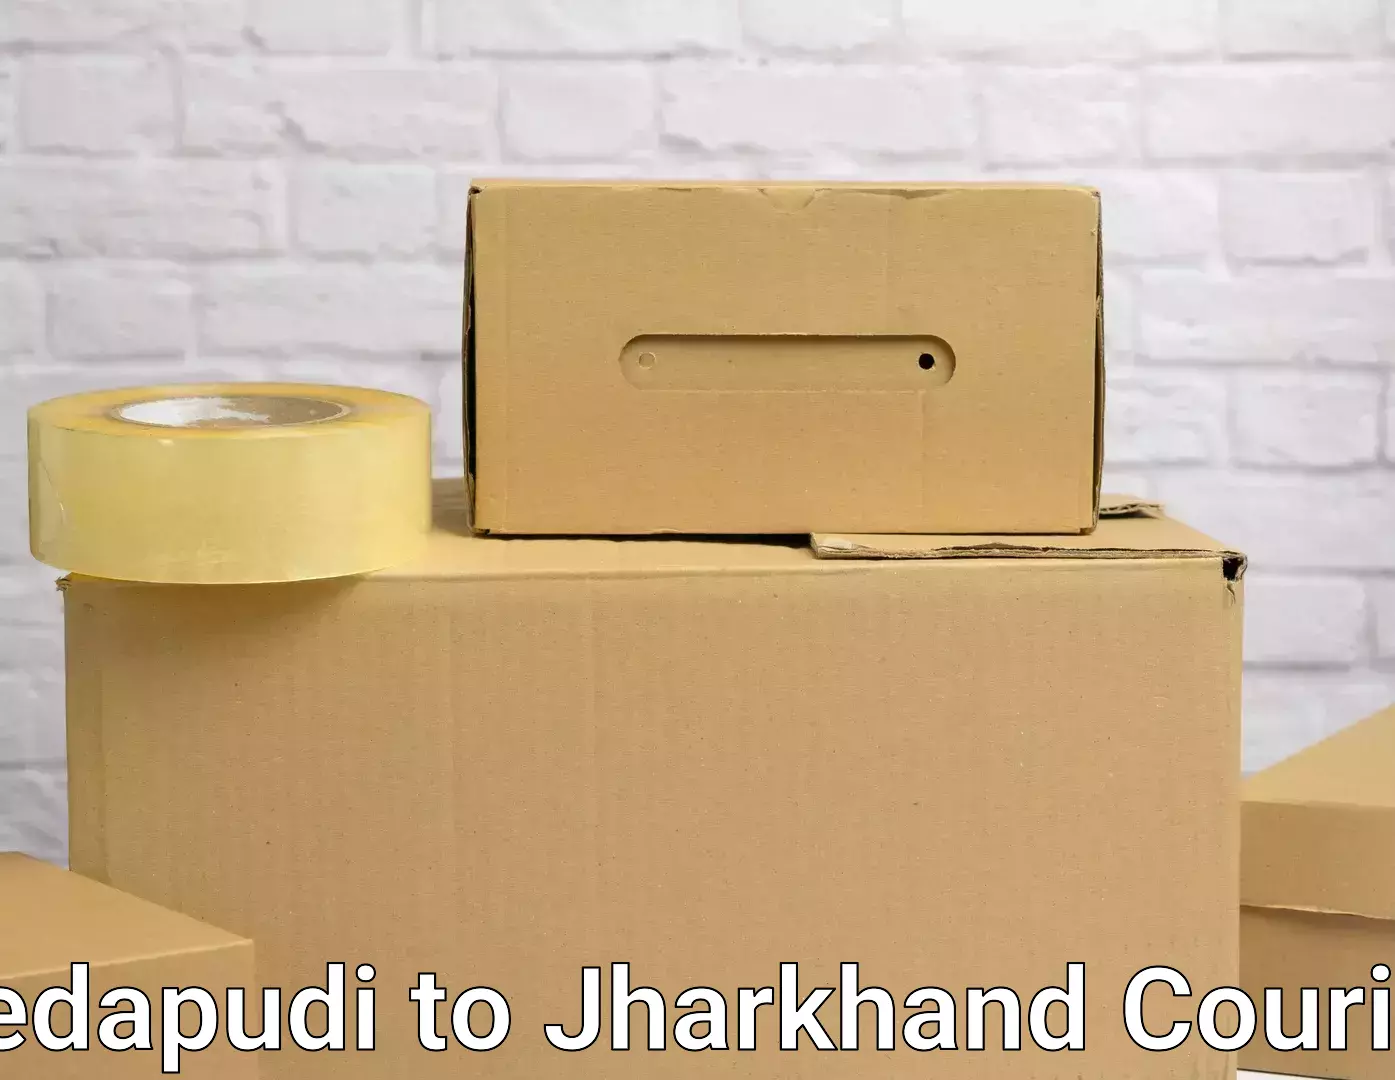 Moving and packing experts Pedapudi to Sahibganj